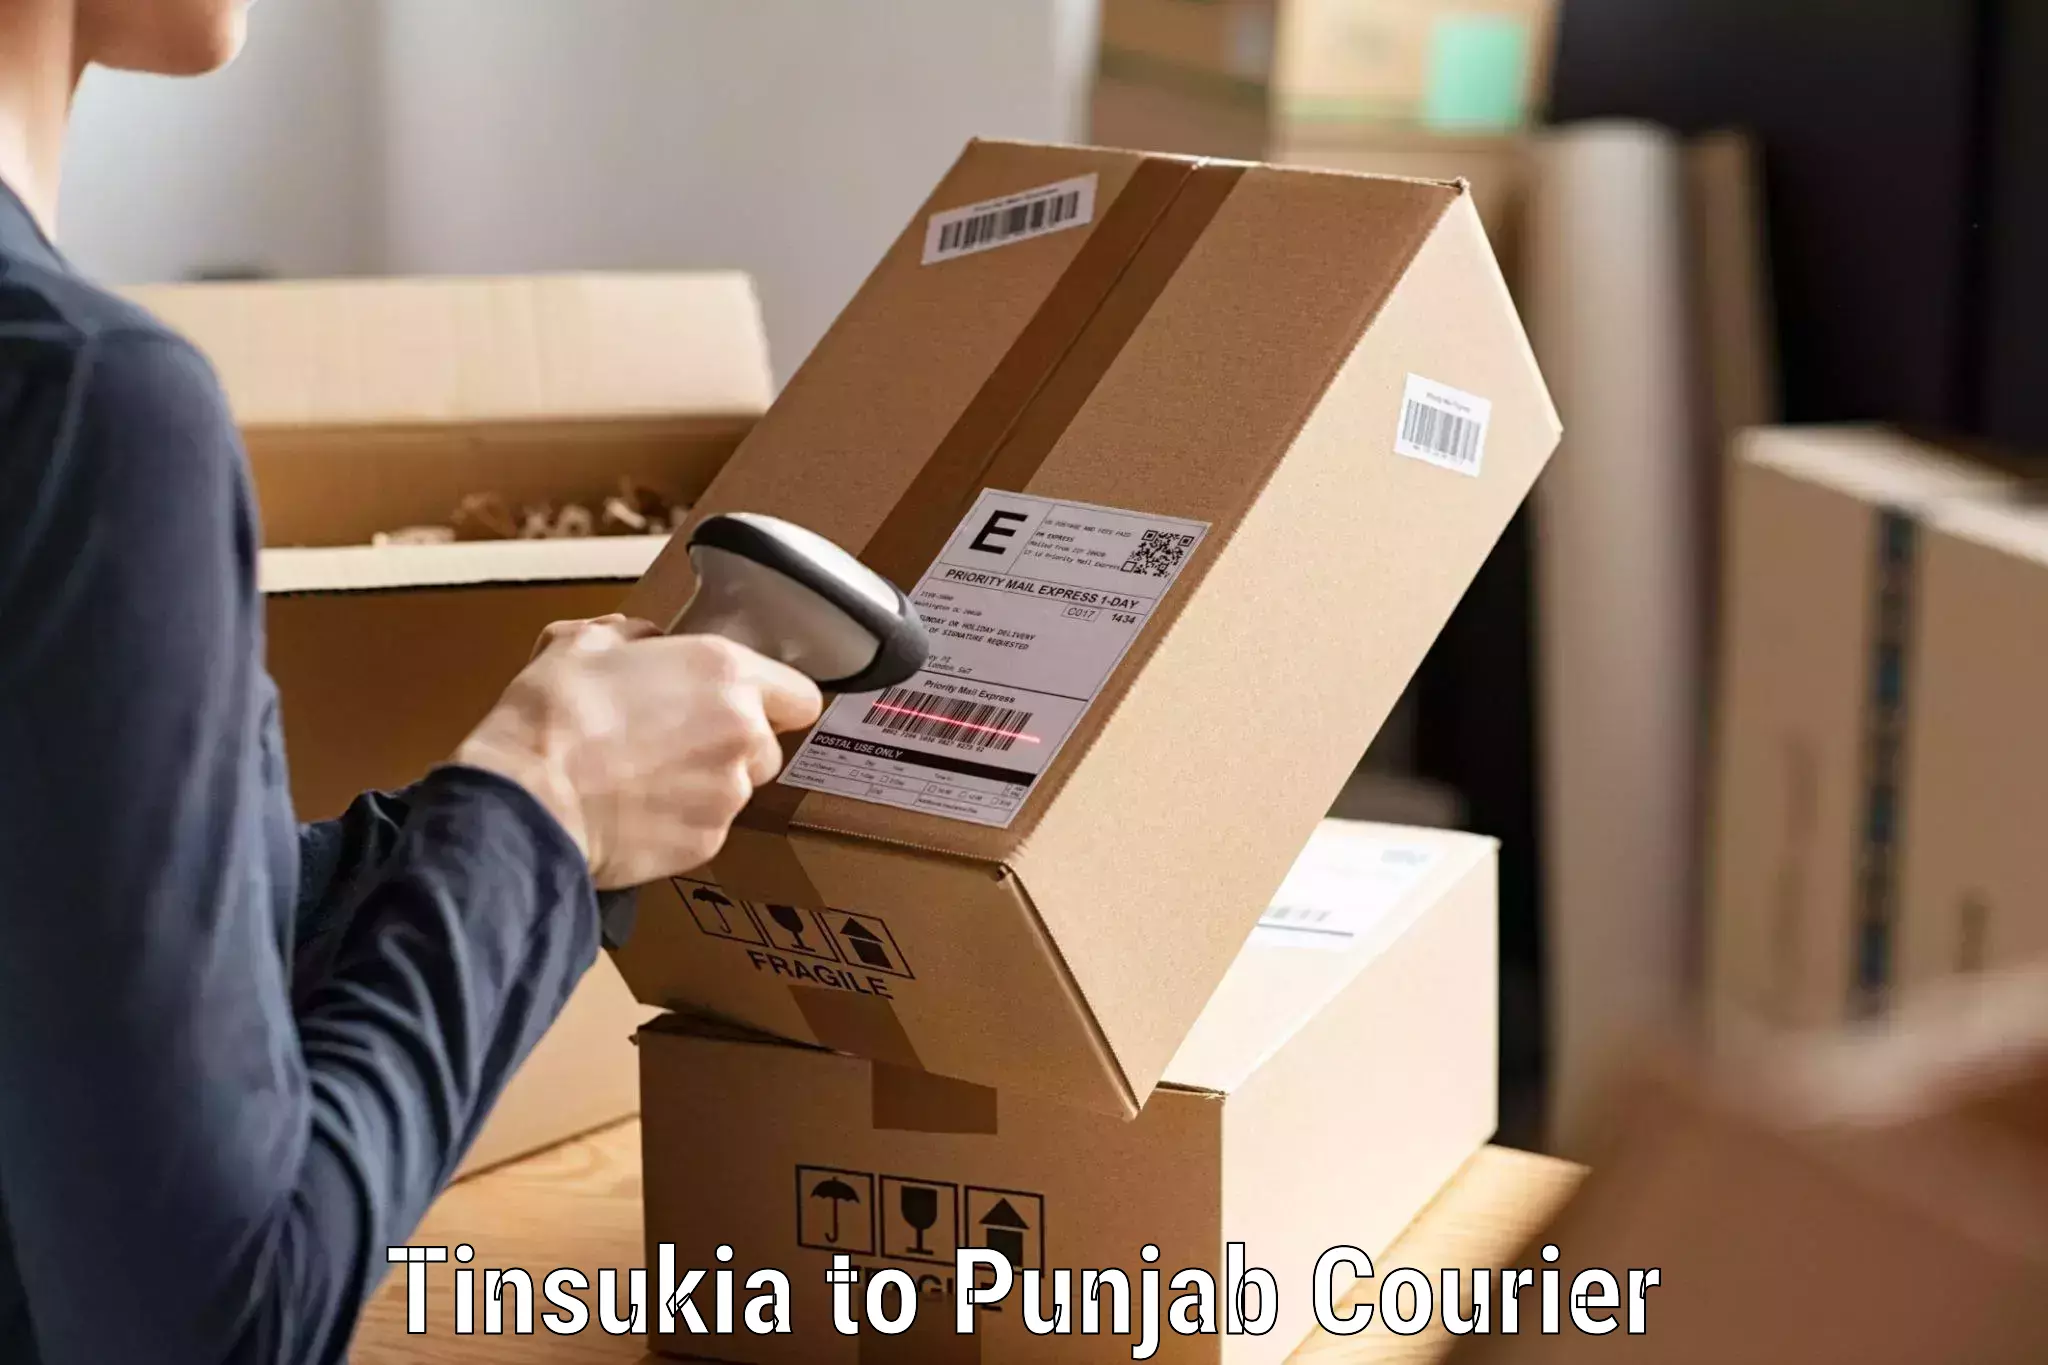 On-demand courier Tinsukia to Goindwal Sahib